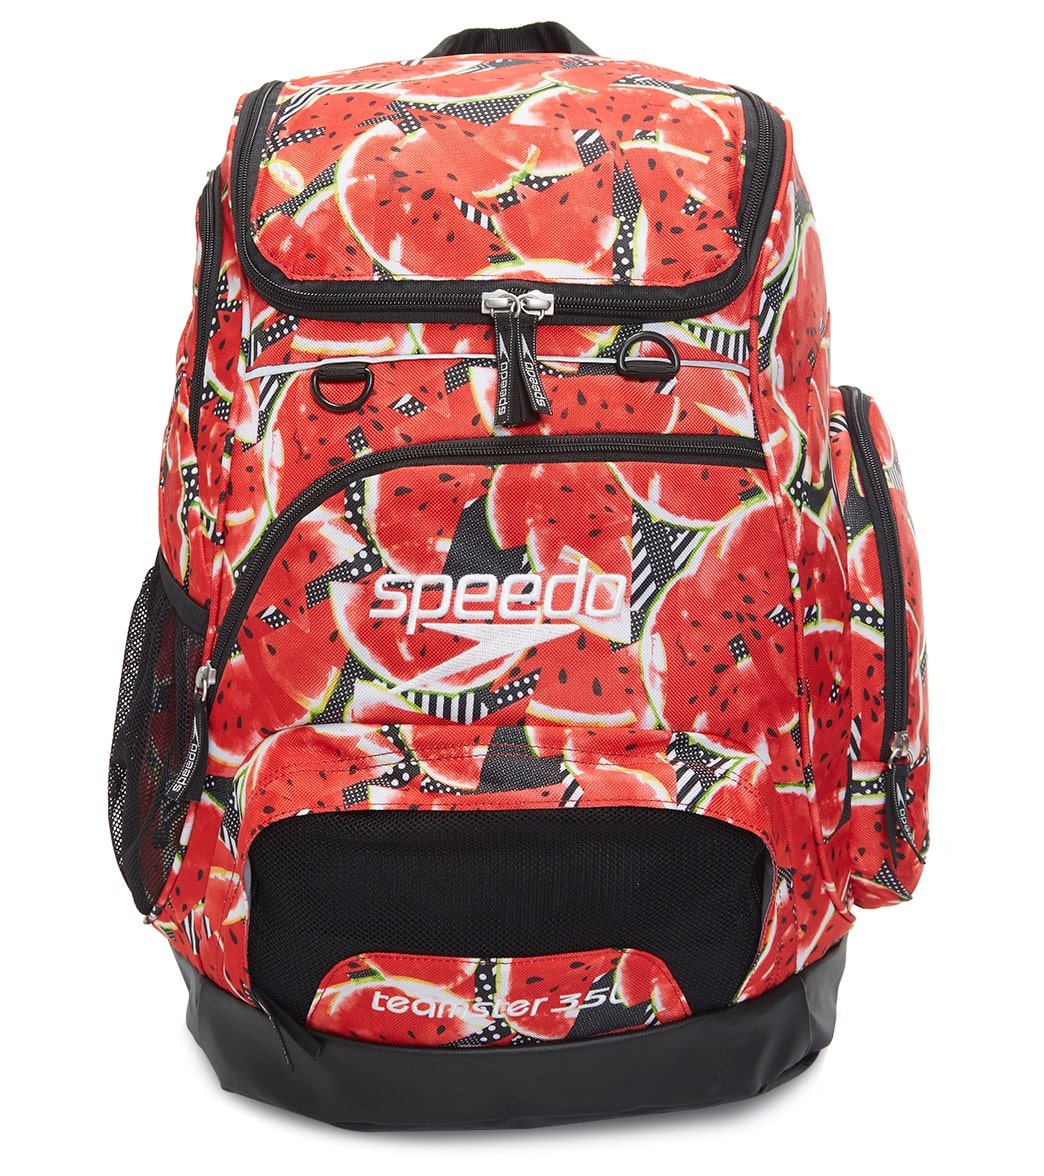 Speedo Printed Teamster 35L Backpack - Deep Coral - Swimoutlet.com